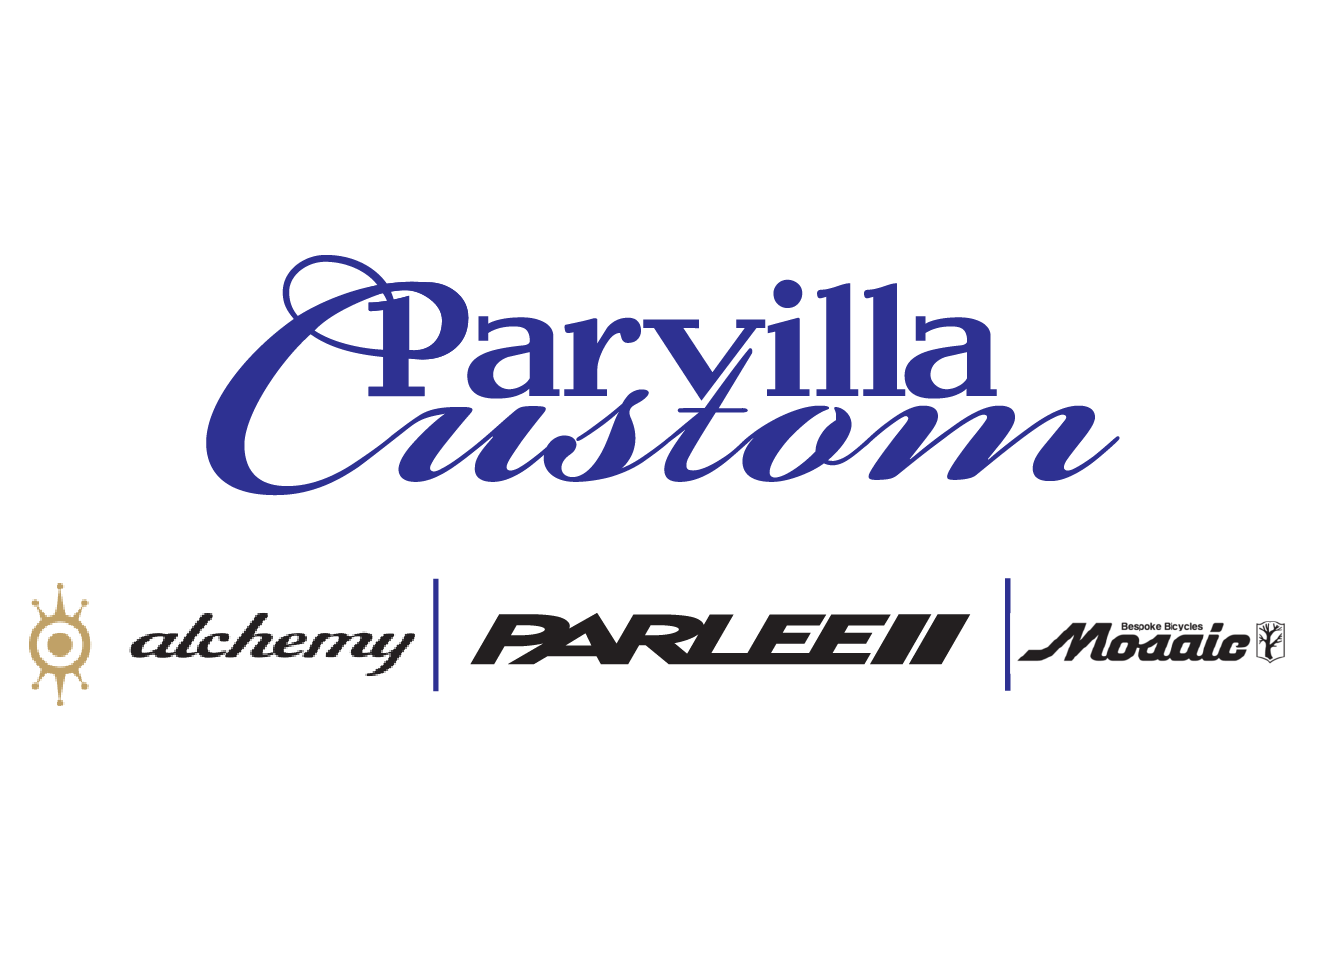 Multisport Logo - Parvilla Cycle & Multisport | Home